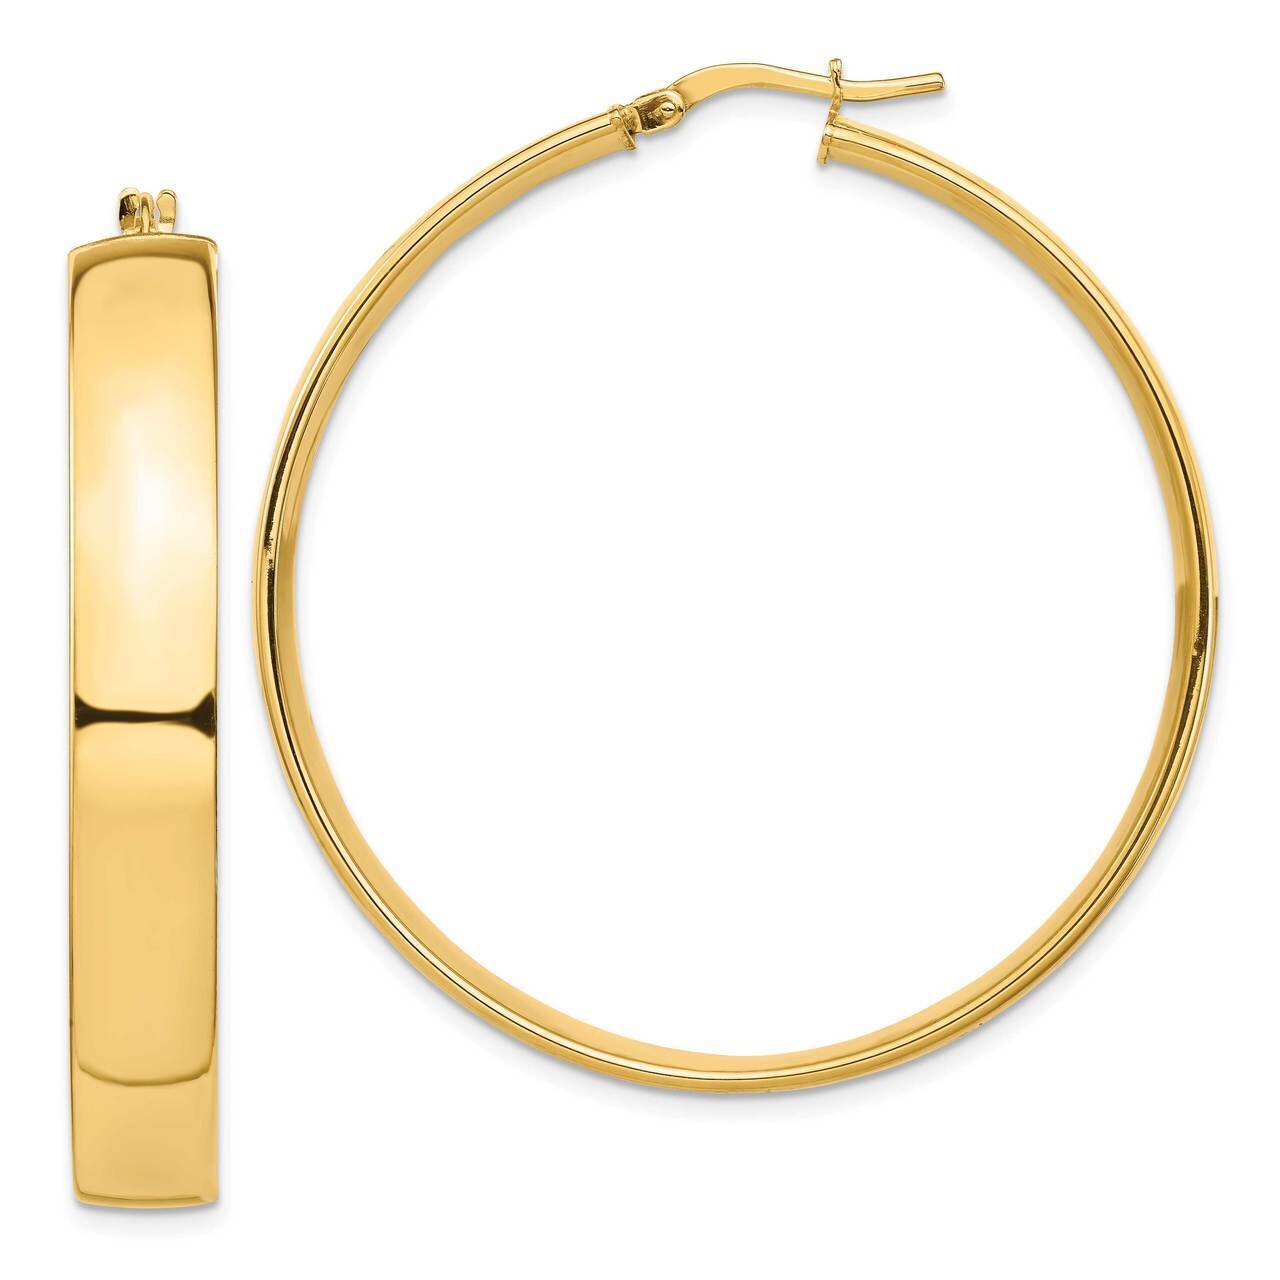 7mm Hoop Earrings 14k Gold High Polished TF1417